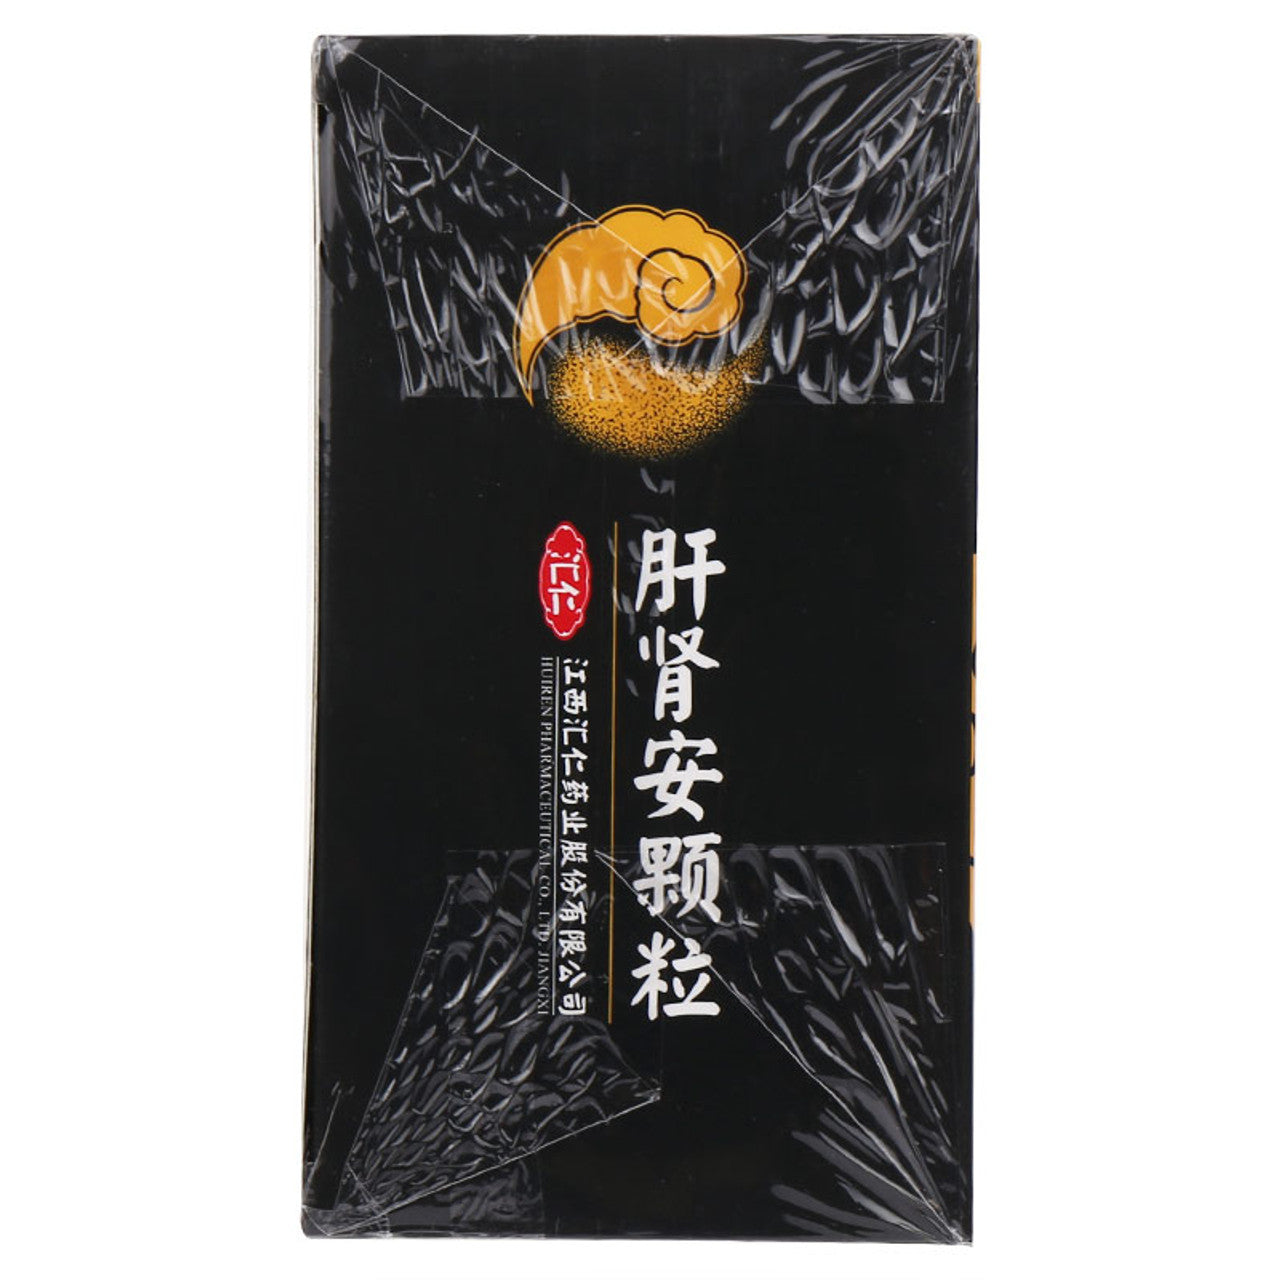 China Herb. Brand Huiren. Ganshen'an Keli or Gan Shen An Ke Li or Ganshen'an Granules or Gan Shen An Granules for Tonifying The Kidney